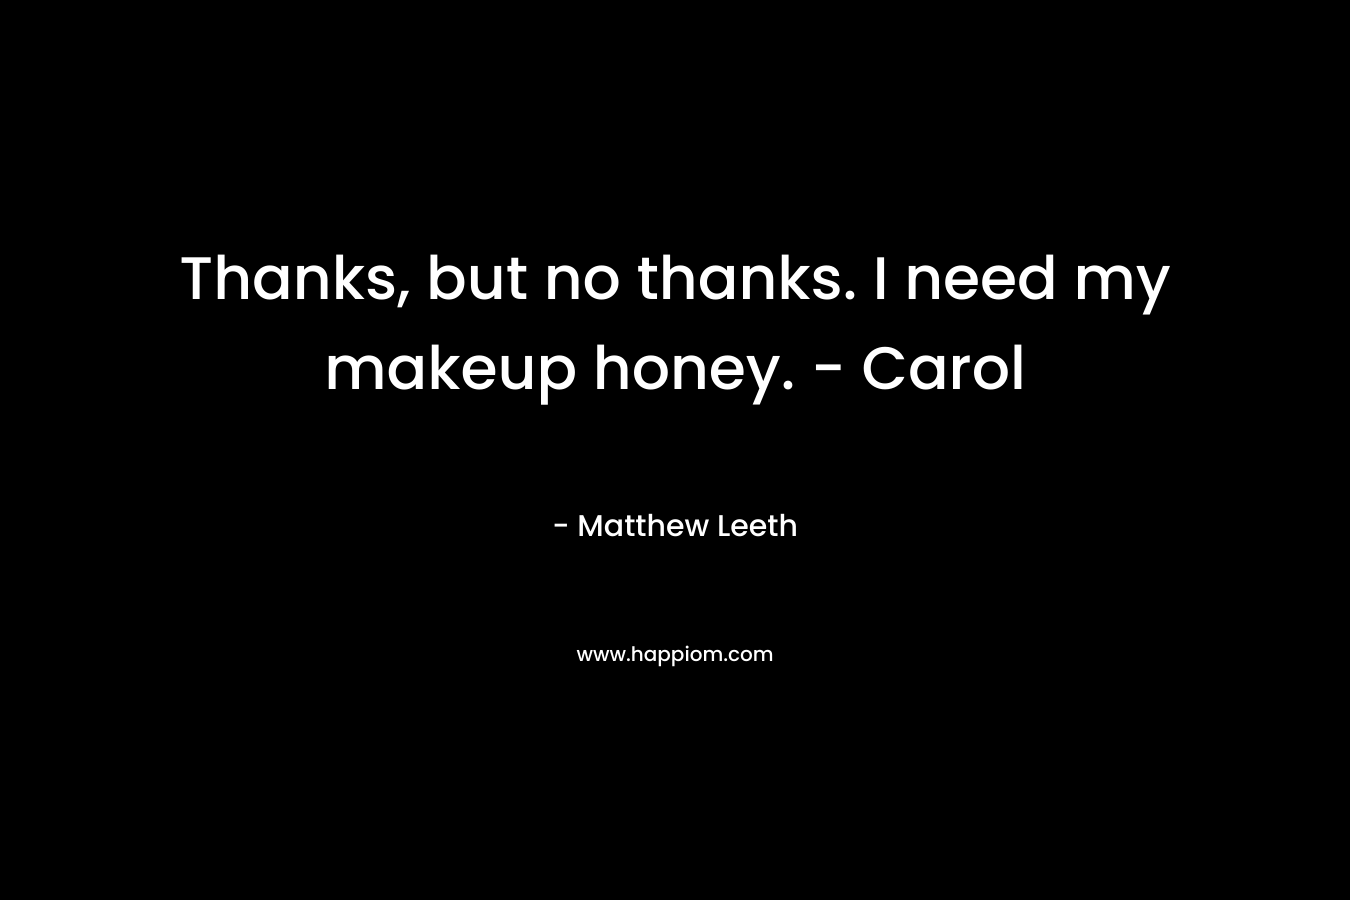 Thanks, but no thanks. I need my makeup honey. - Carol